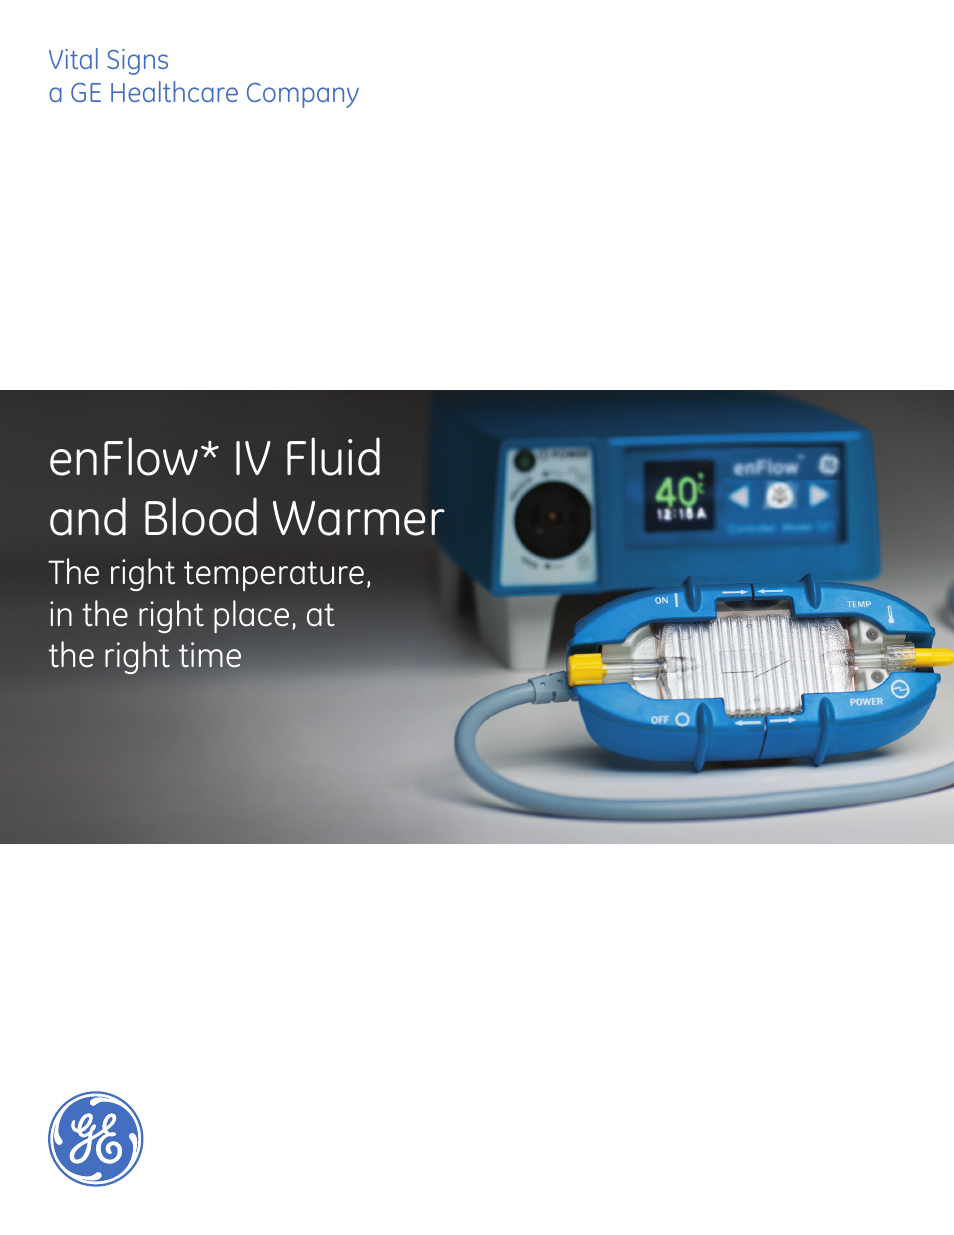 enFlow IV Fluid and Blood Warmer - Booklet